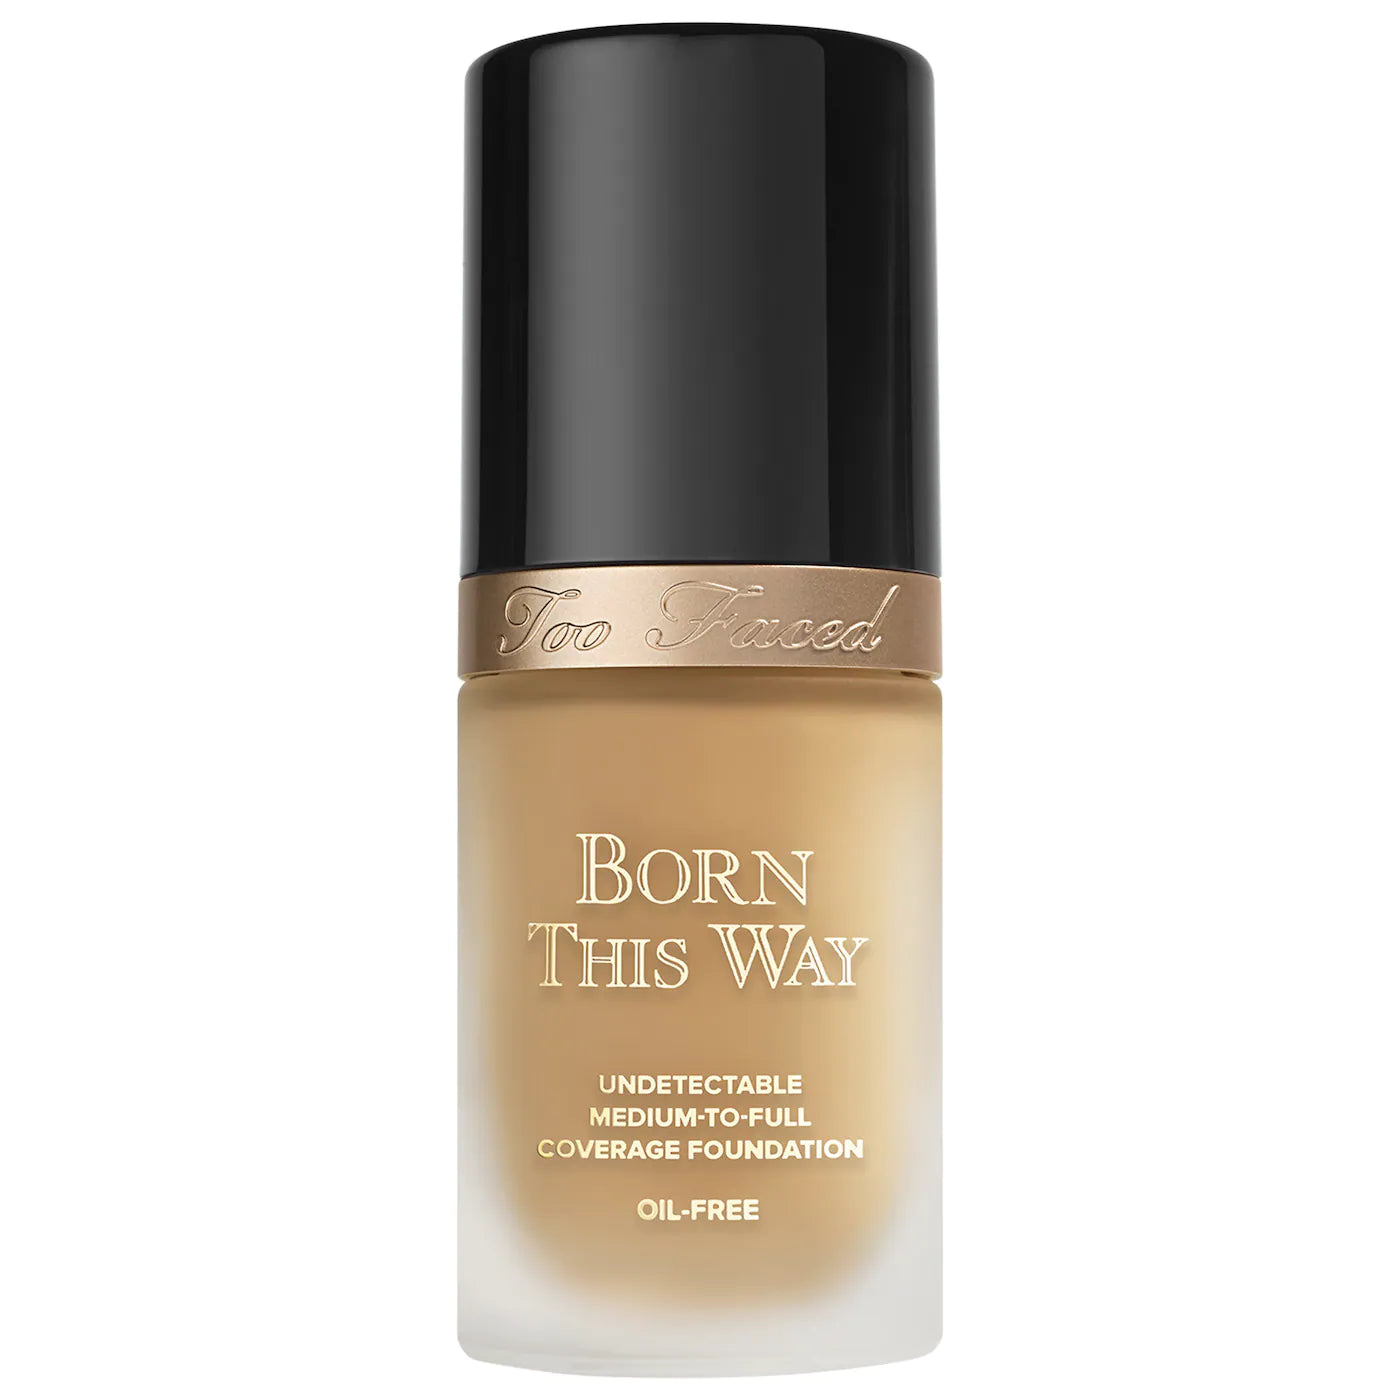 Too Faced - Born This Way Natural Finish Longwear Liquid Foundation | 30 mL